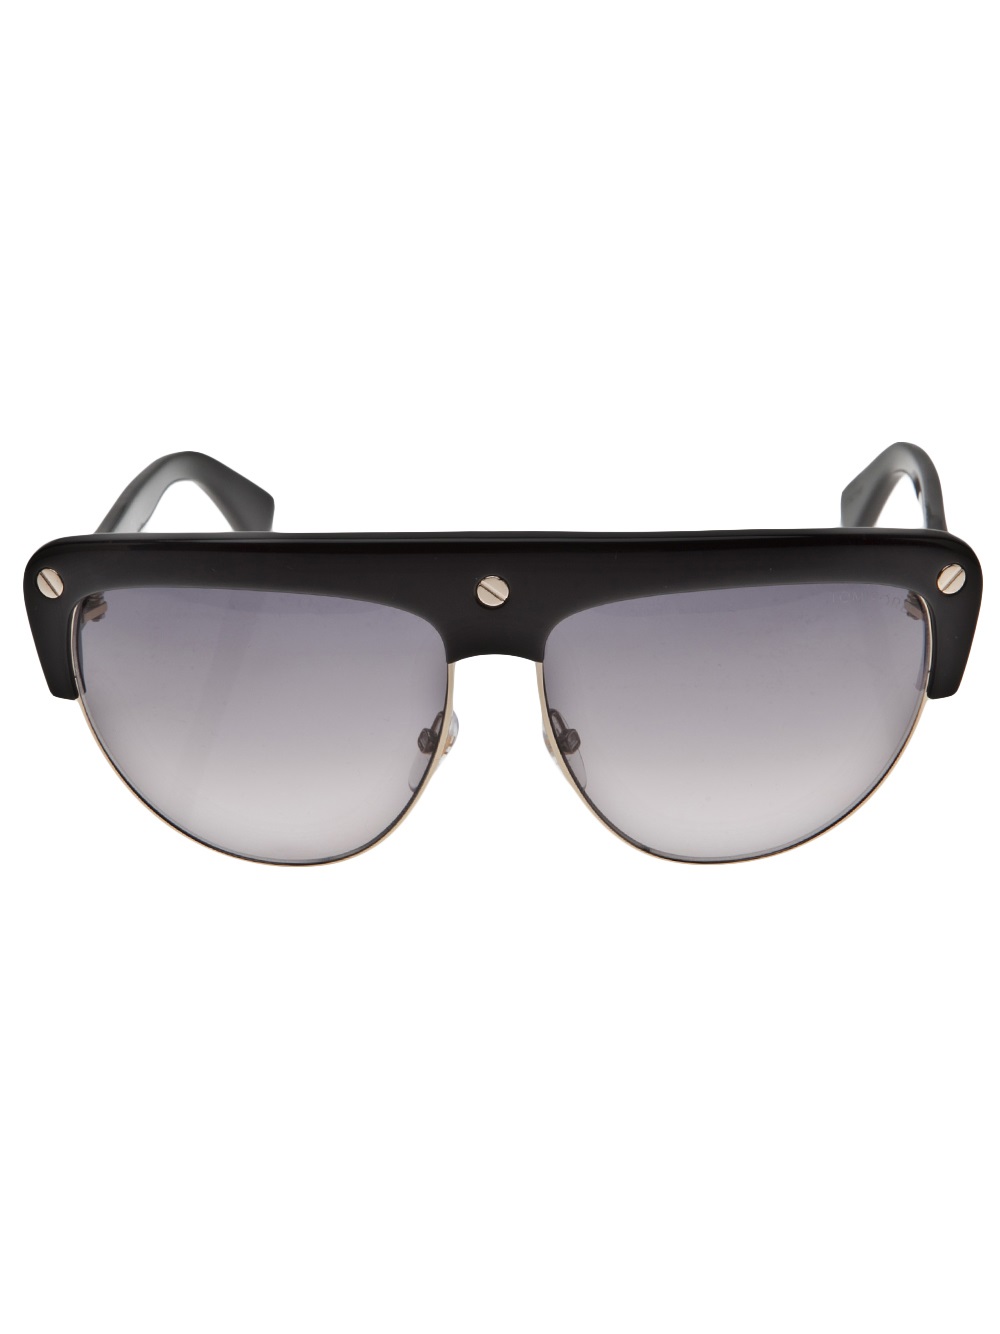 Tom ford black square frame sunglasses #4